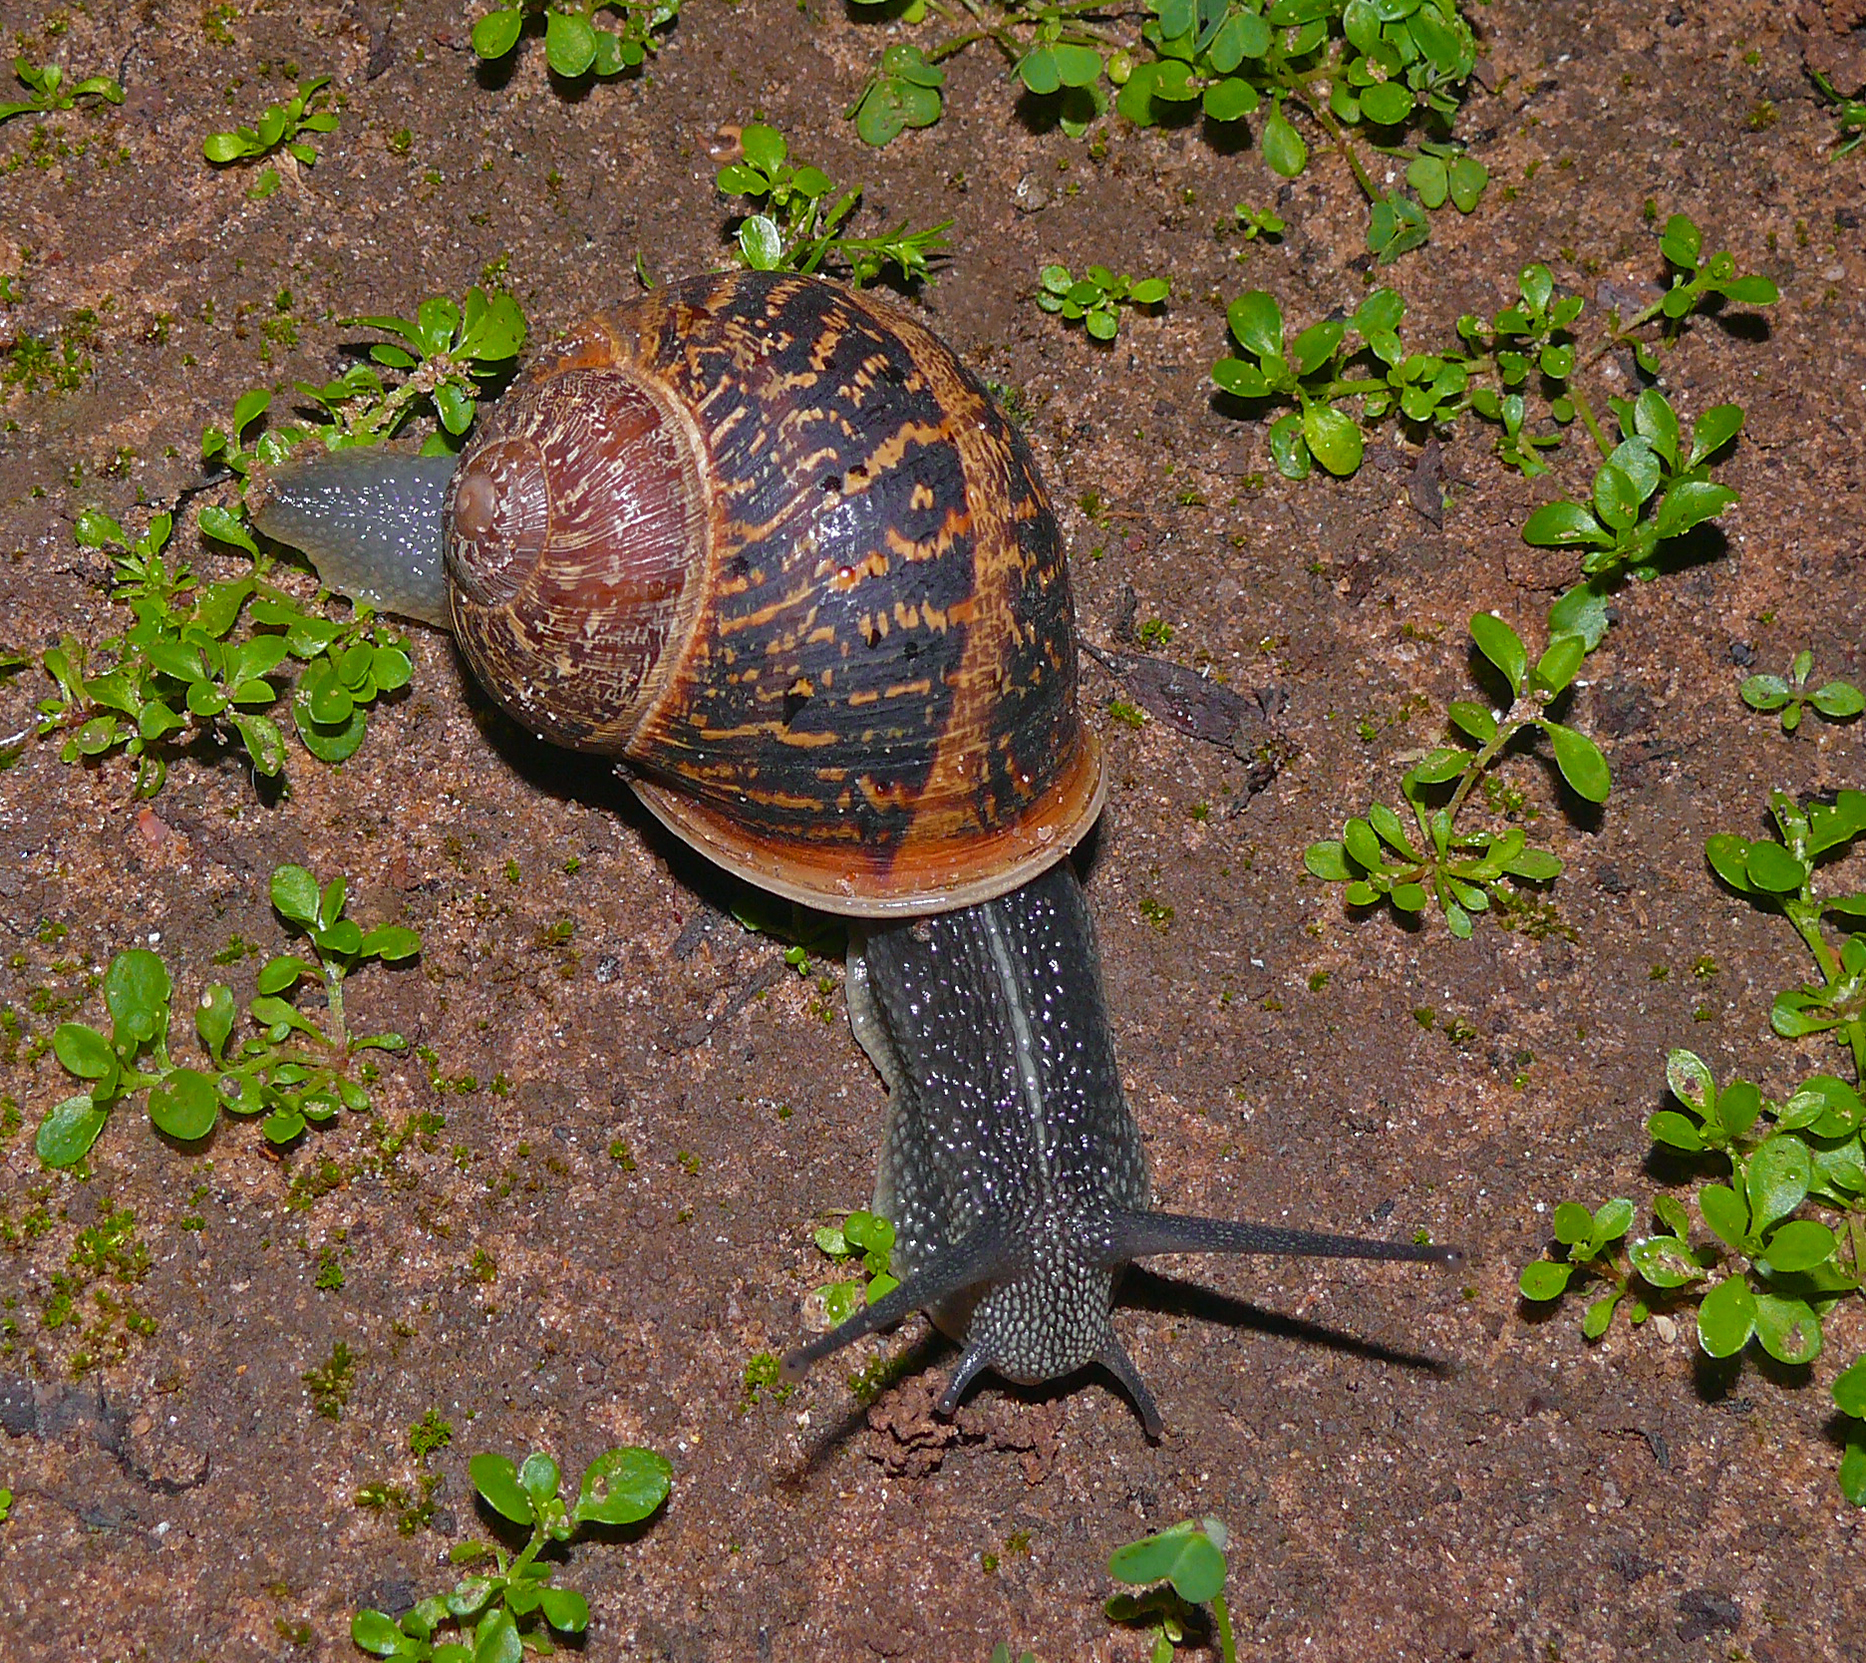 Cornu aspersum (formerly Helix aspersa) – a common land snail, a gastropod.